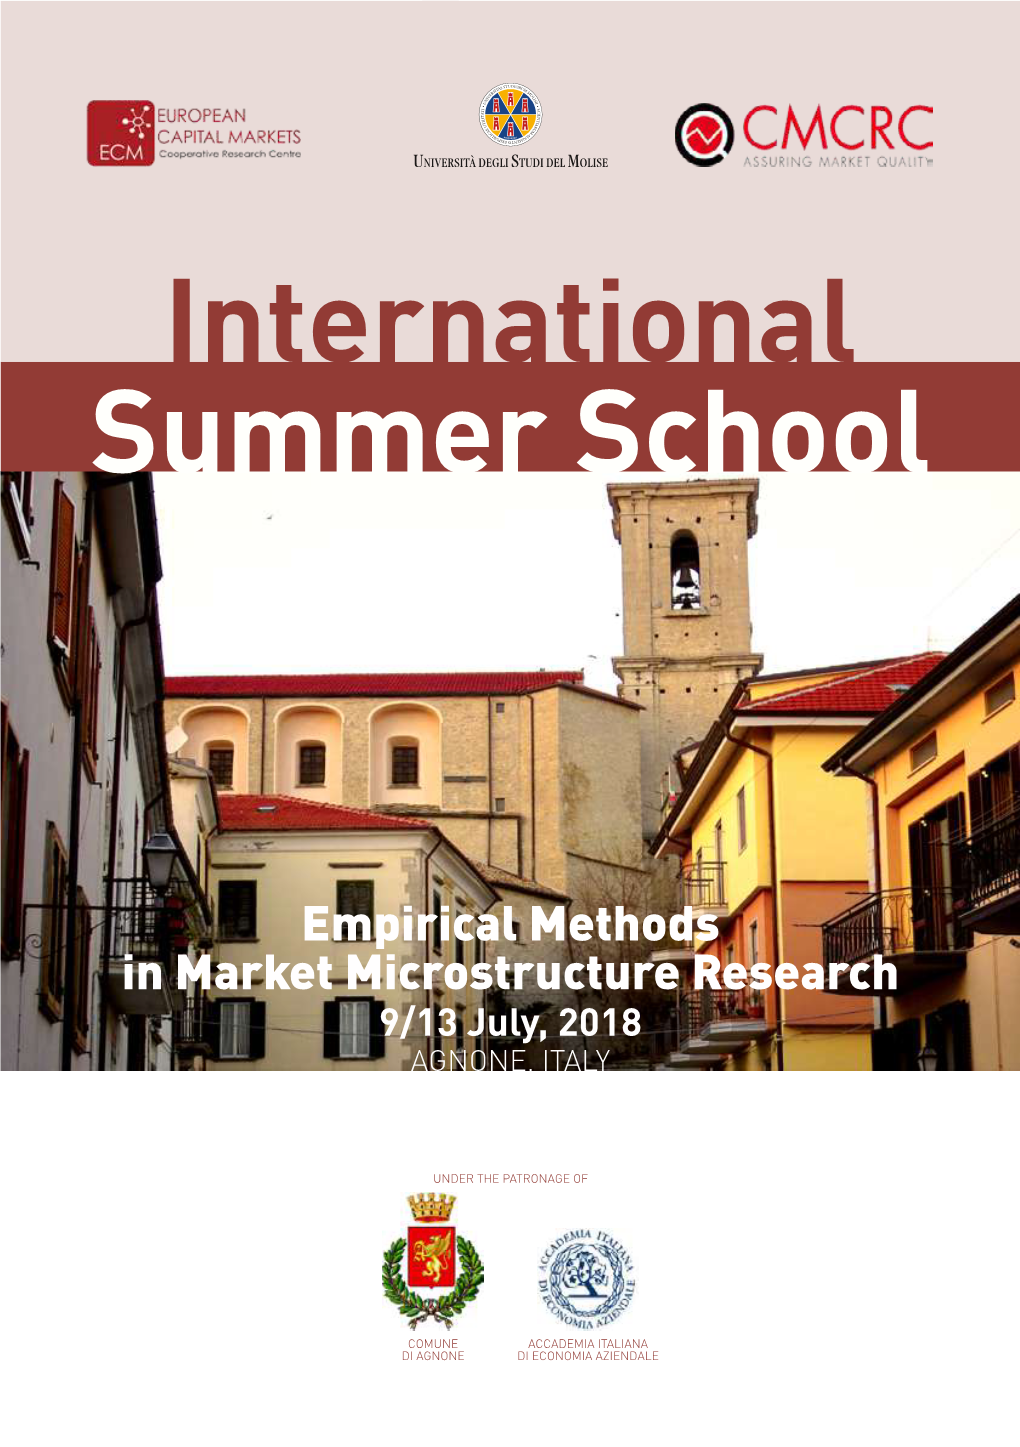 International Summer School 9/13 July, 2018 AGNONE, ITALY